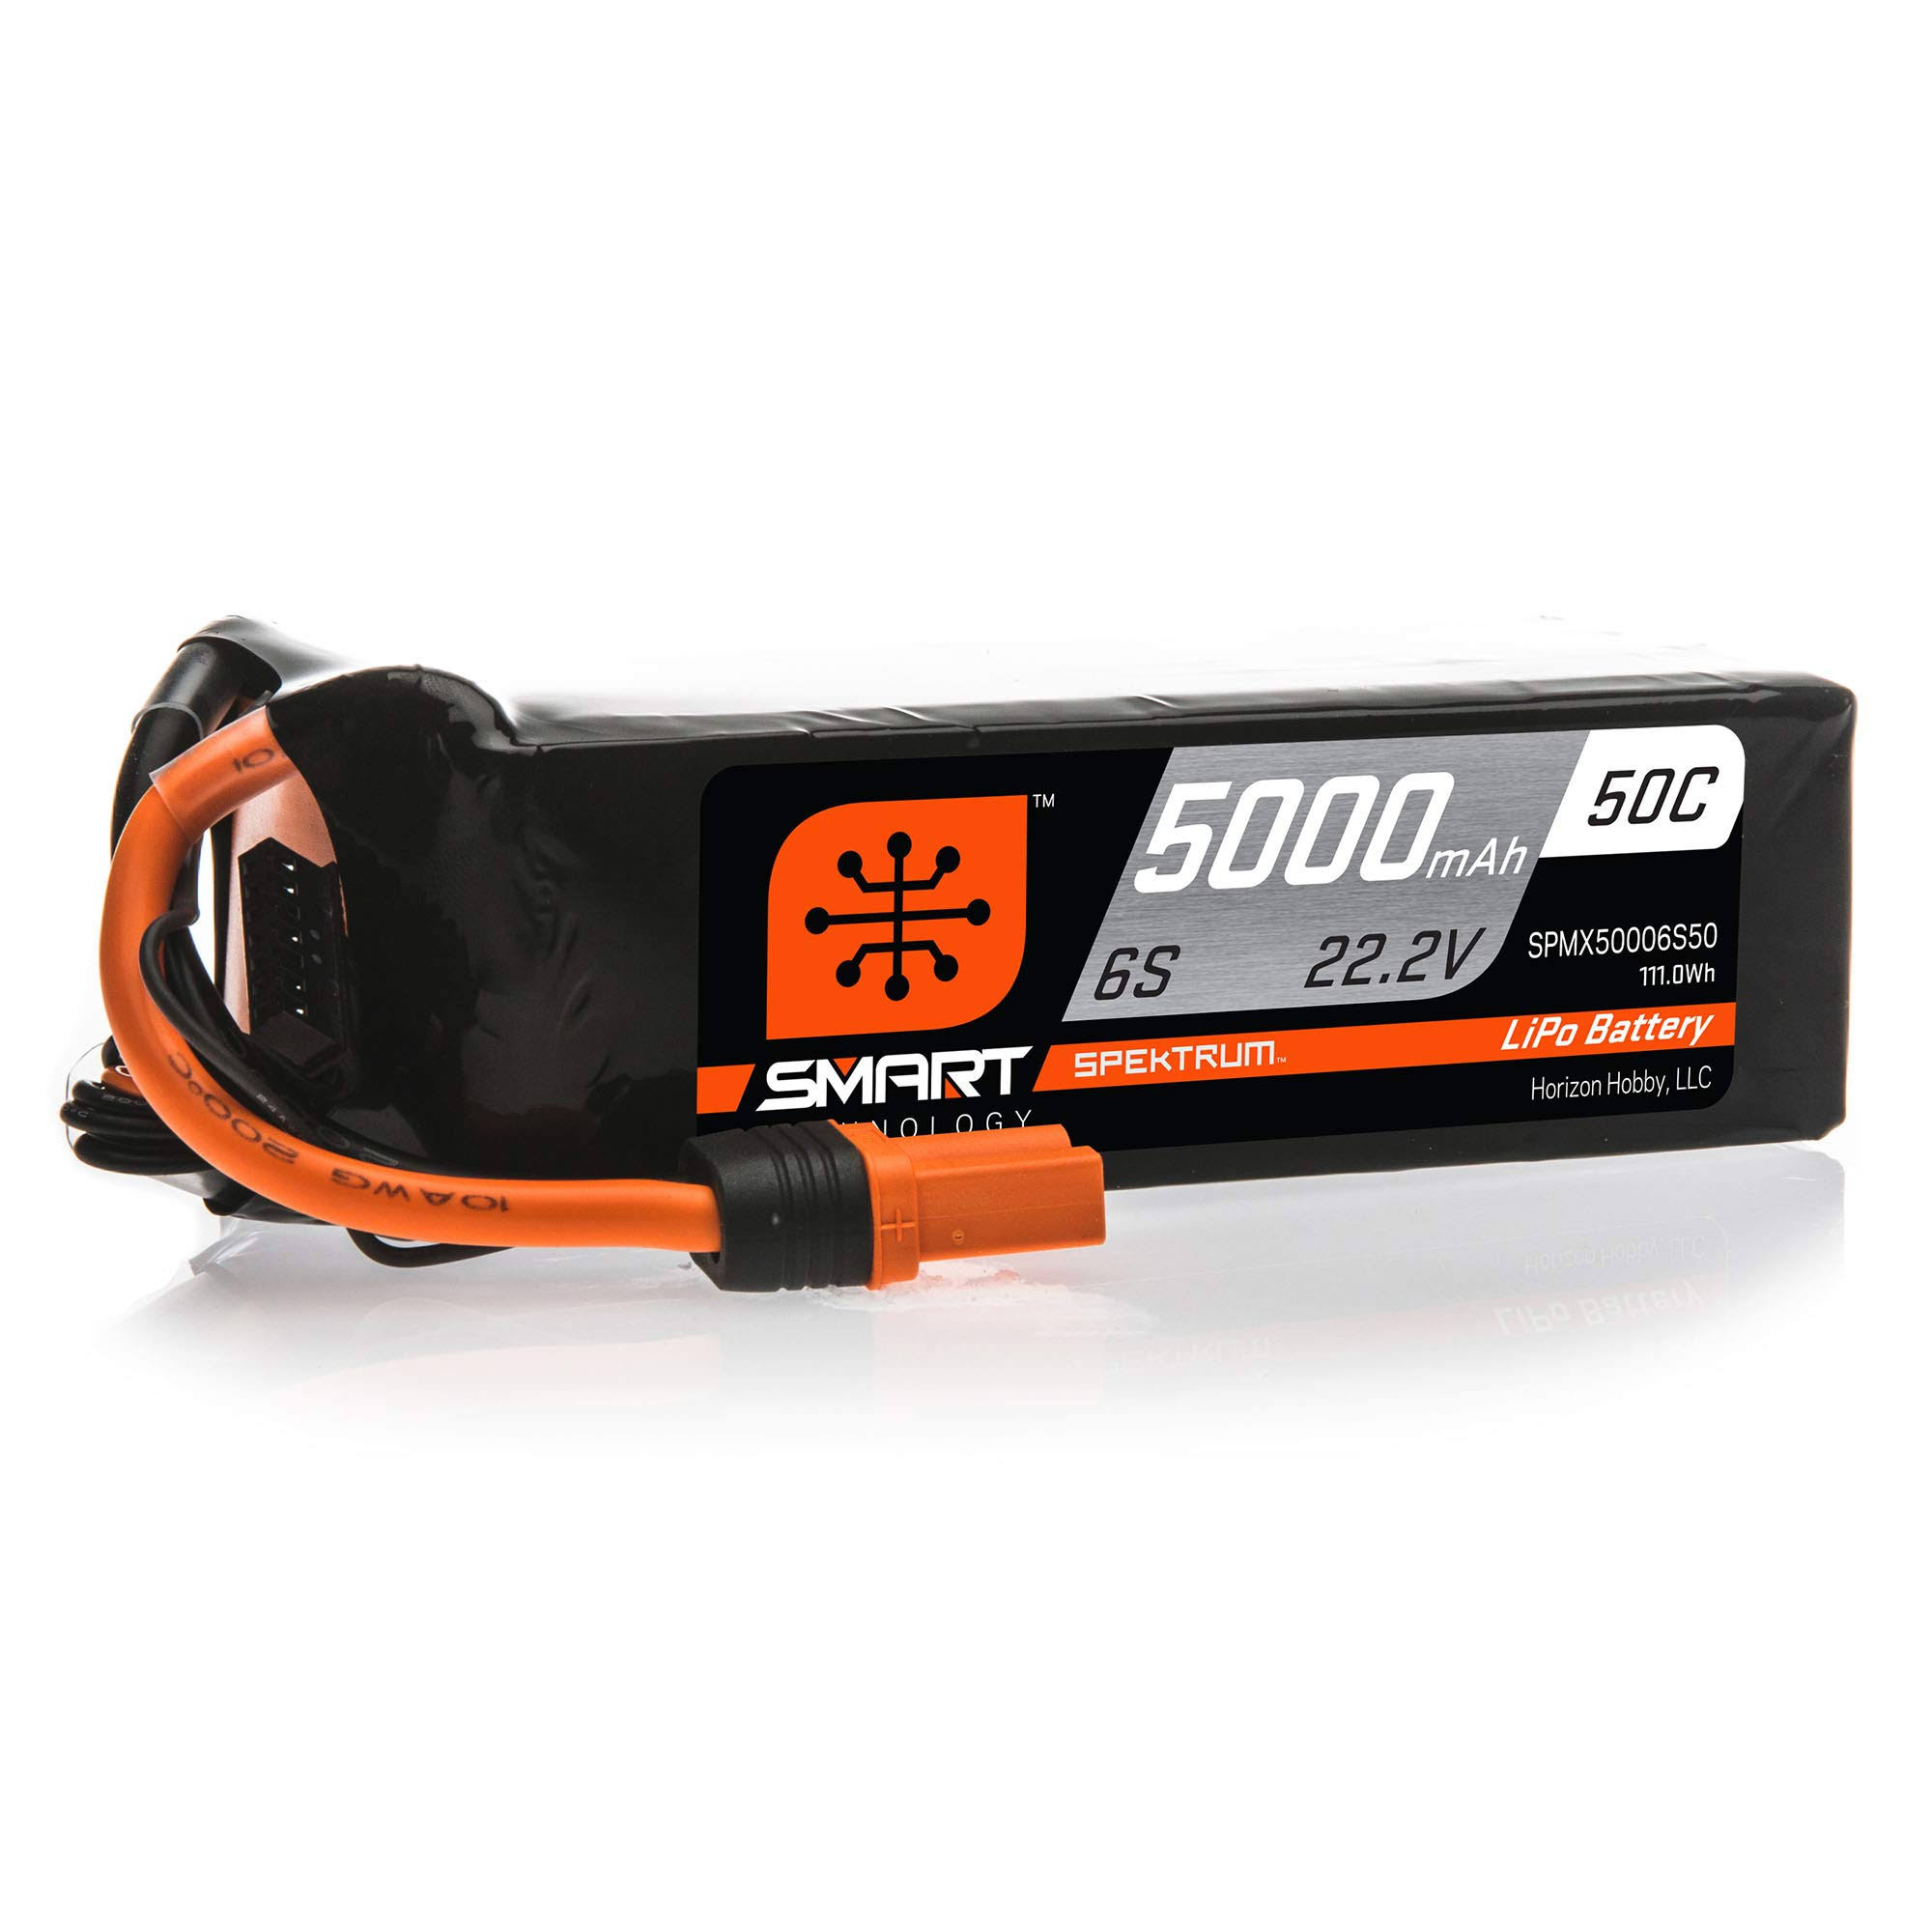 Spektrum 5000mAh 6s 22.2V 50C Smart Lipo Battery IC5 (SPMX50006S50)